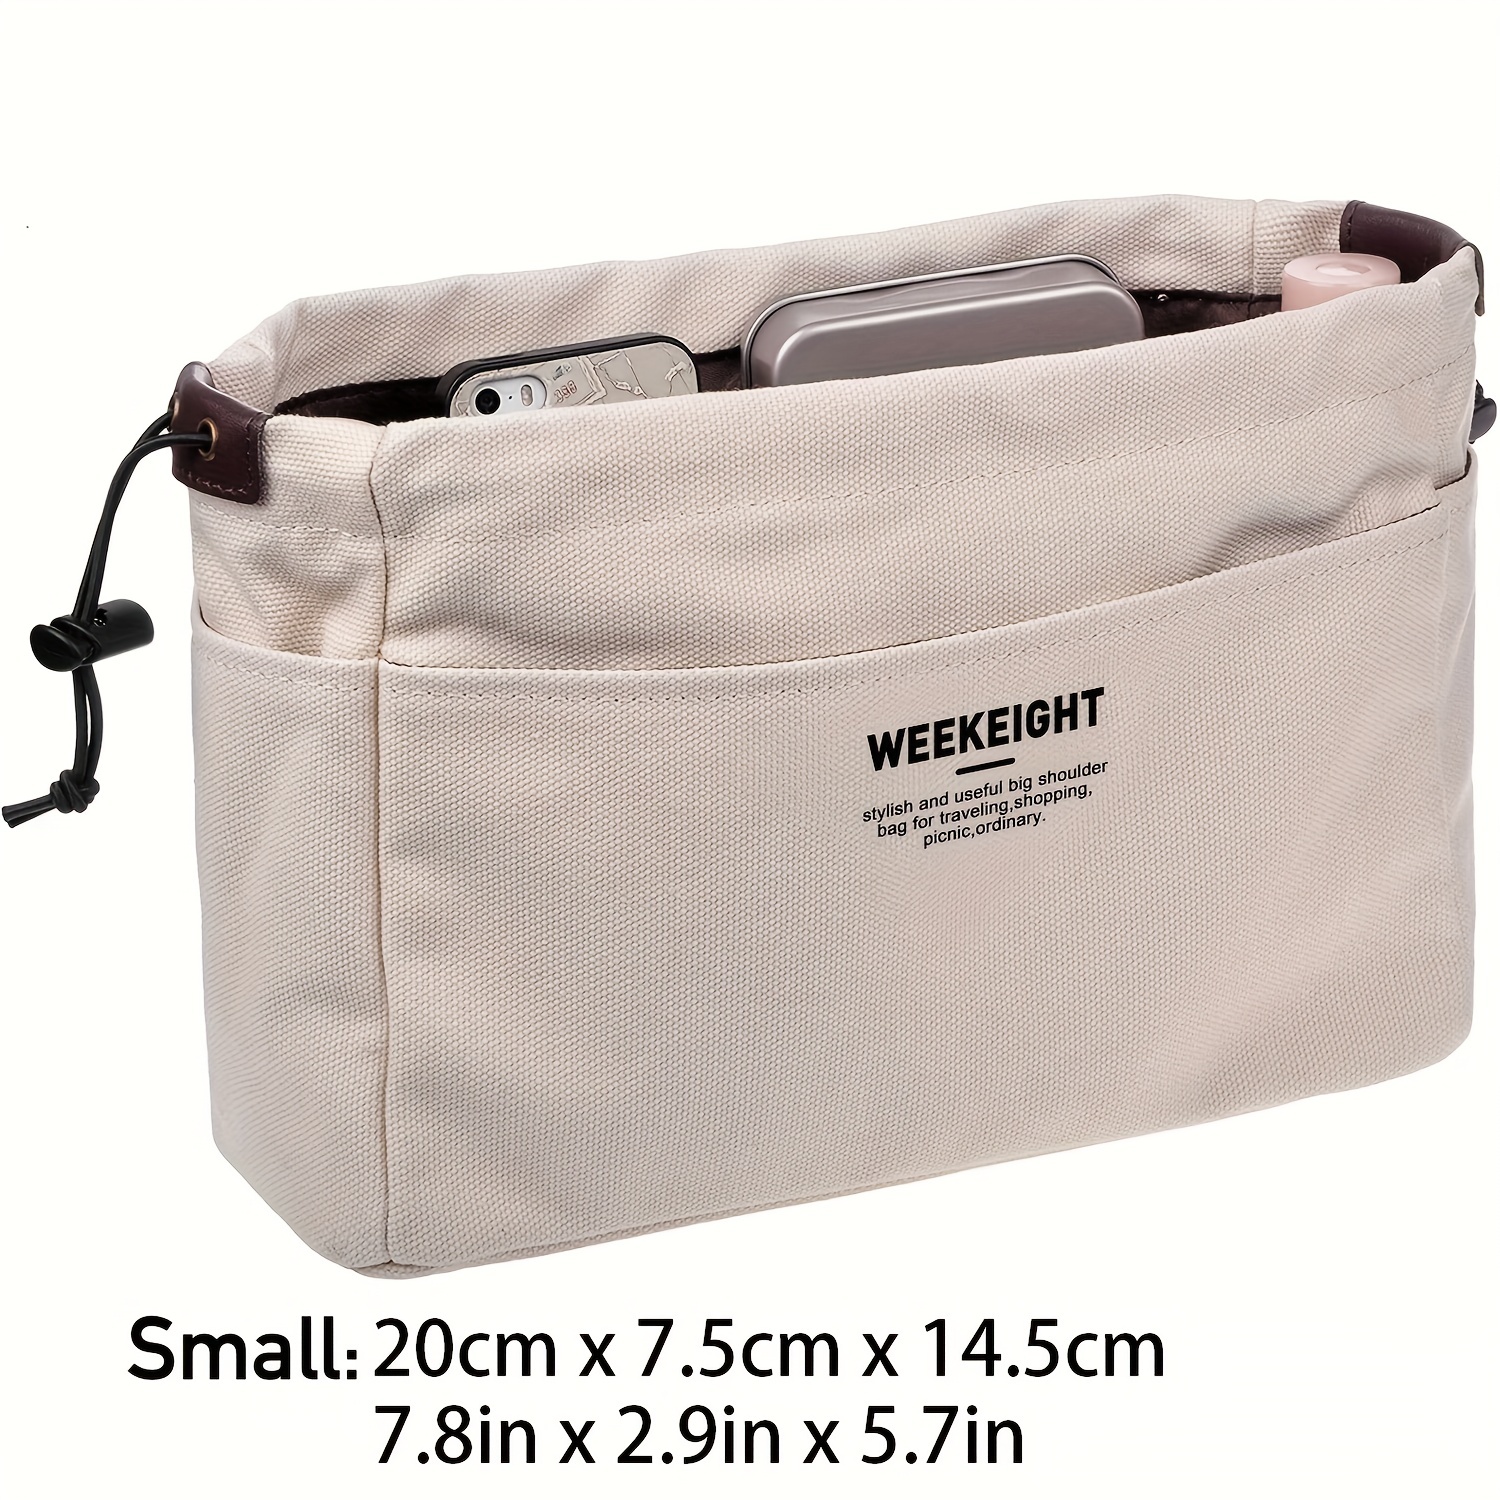 Minimalist Fashion Bag Organizer Insert, Storage Bag With Multiple